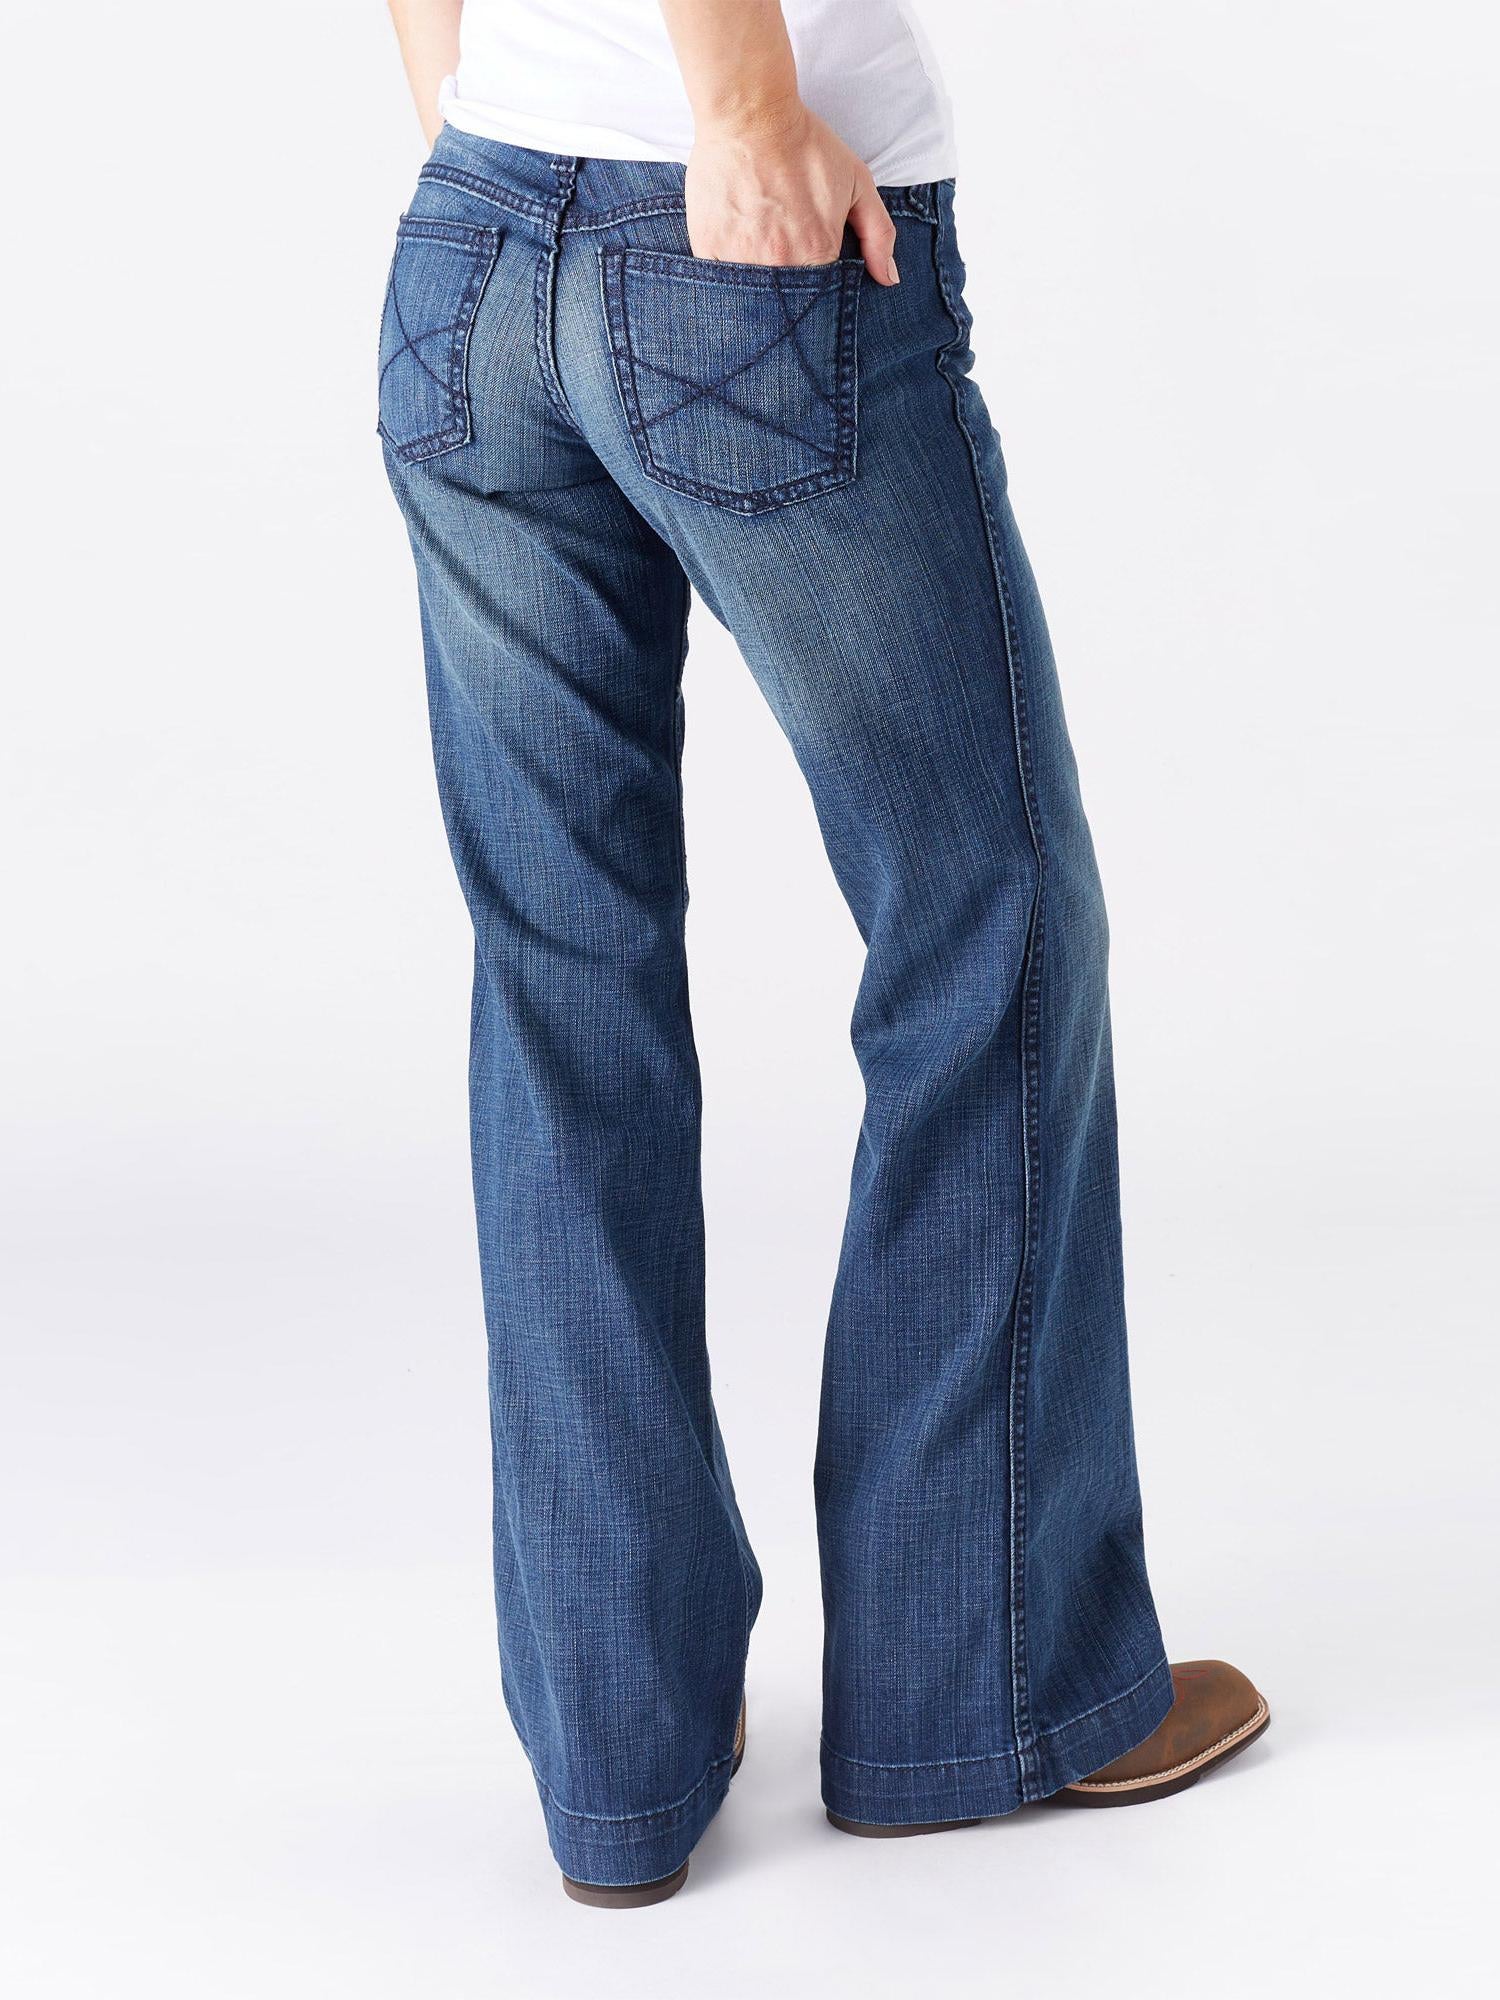 Ariat Women's Trouser Ella Jeans - Riding Warehouse